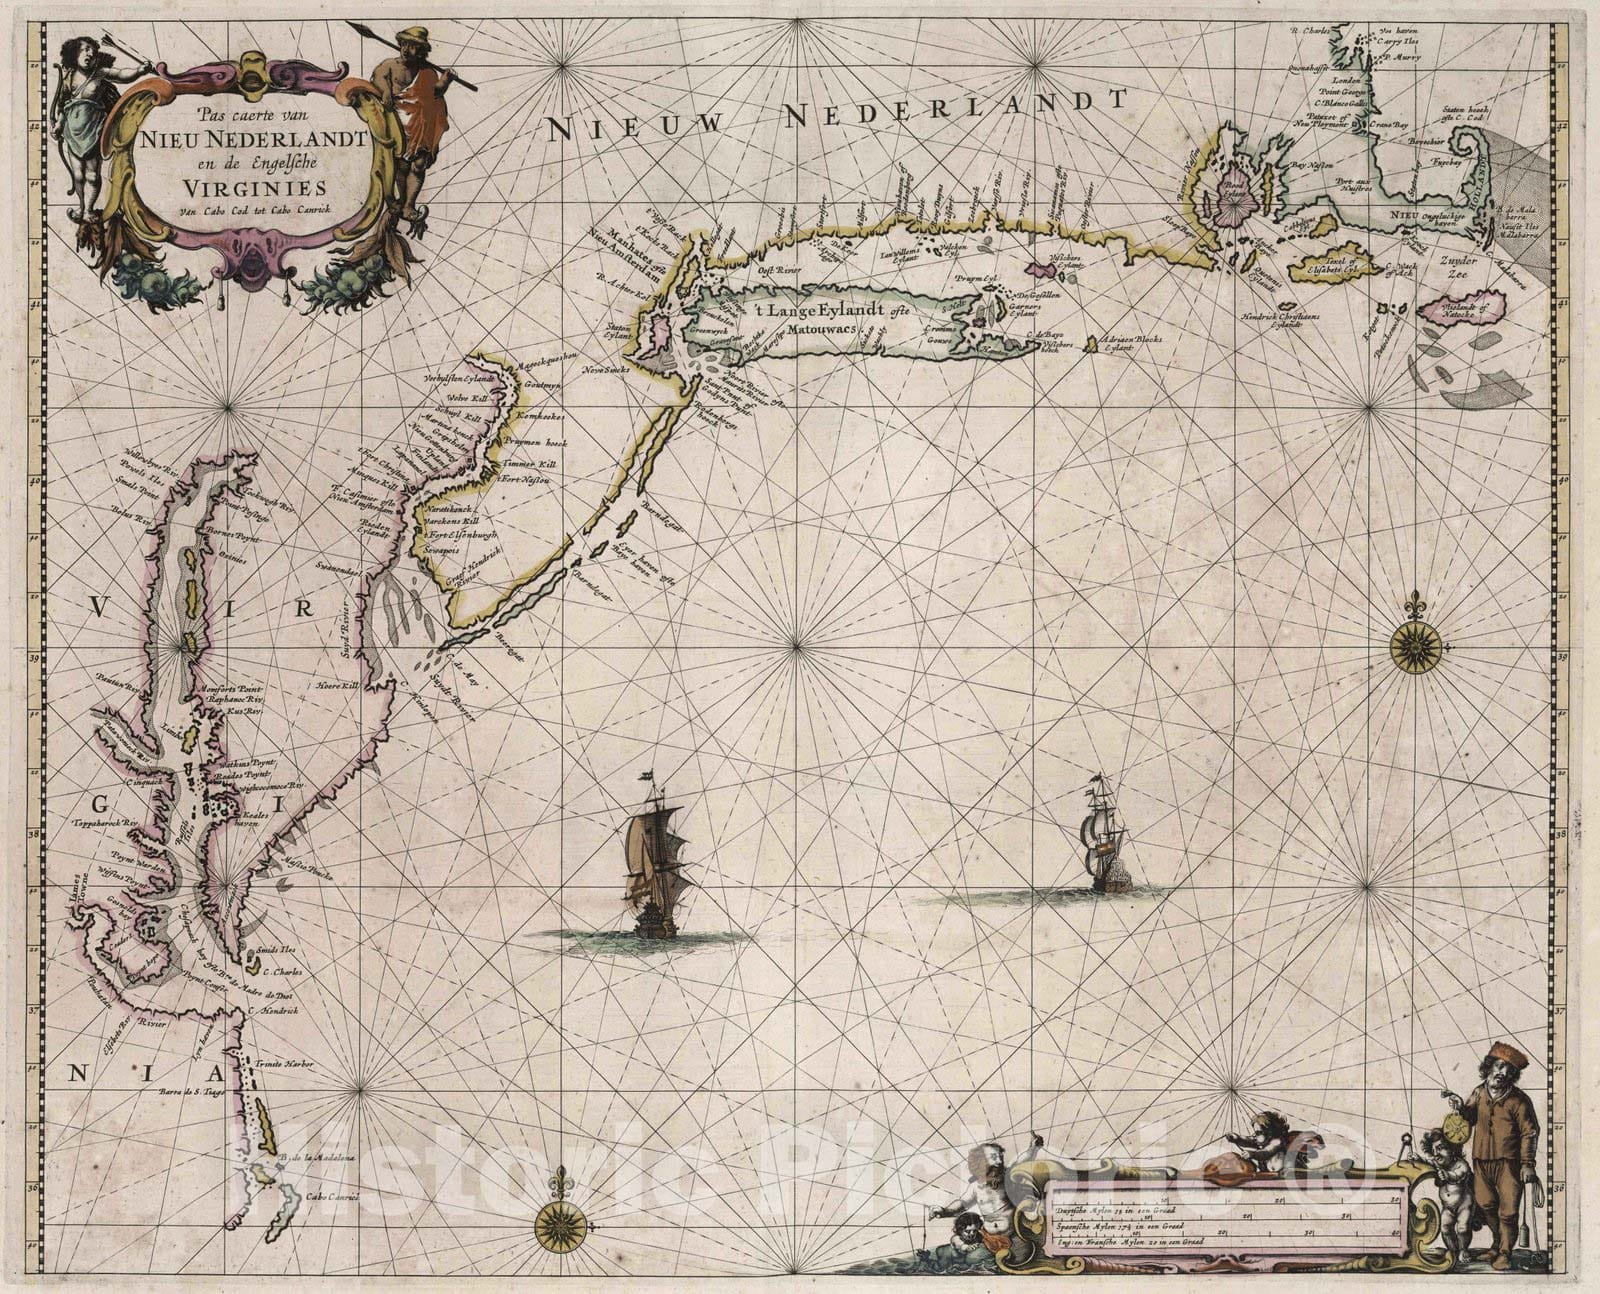 Historic Map : Massachusetts, Atlantic Seaboard (United States) 1667 Pas caerte van Nieu Nederlandt en de Engelsche Virginies. , Vintage Wall Art